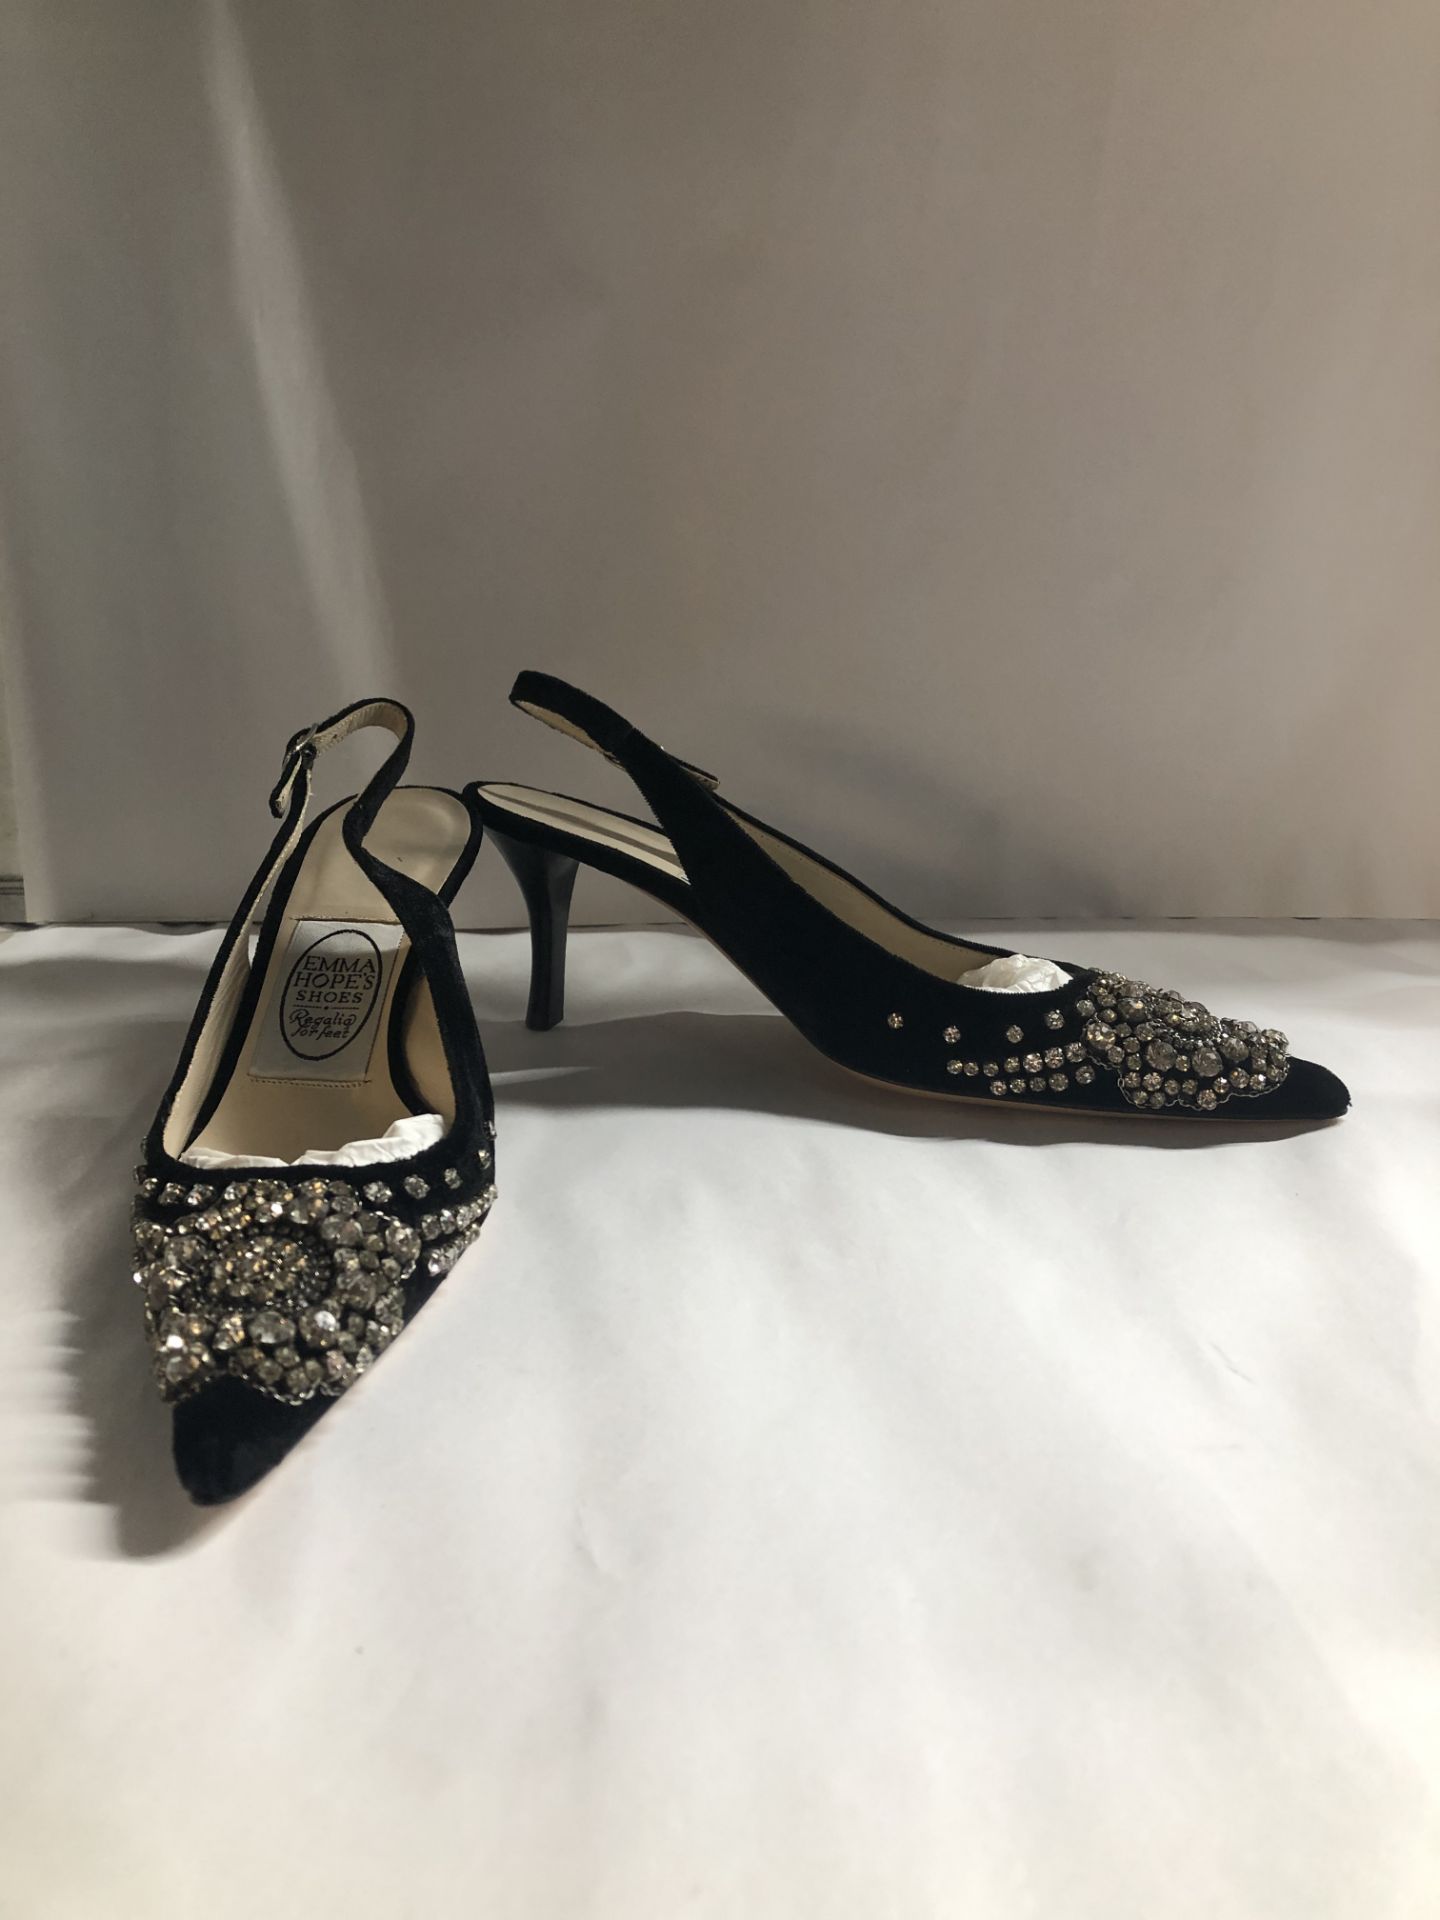 Emma Hope's Shoes Black Velvet Heels.EU 38 RRP £399.00